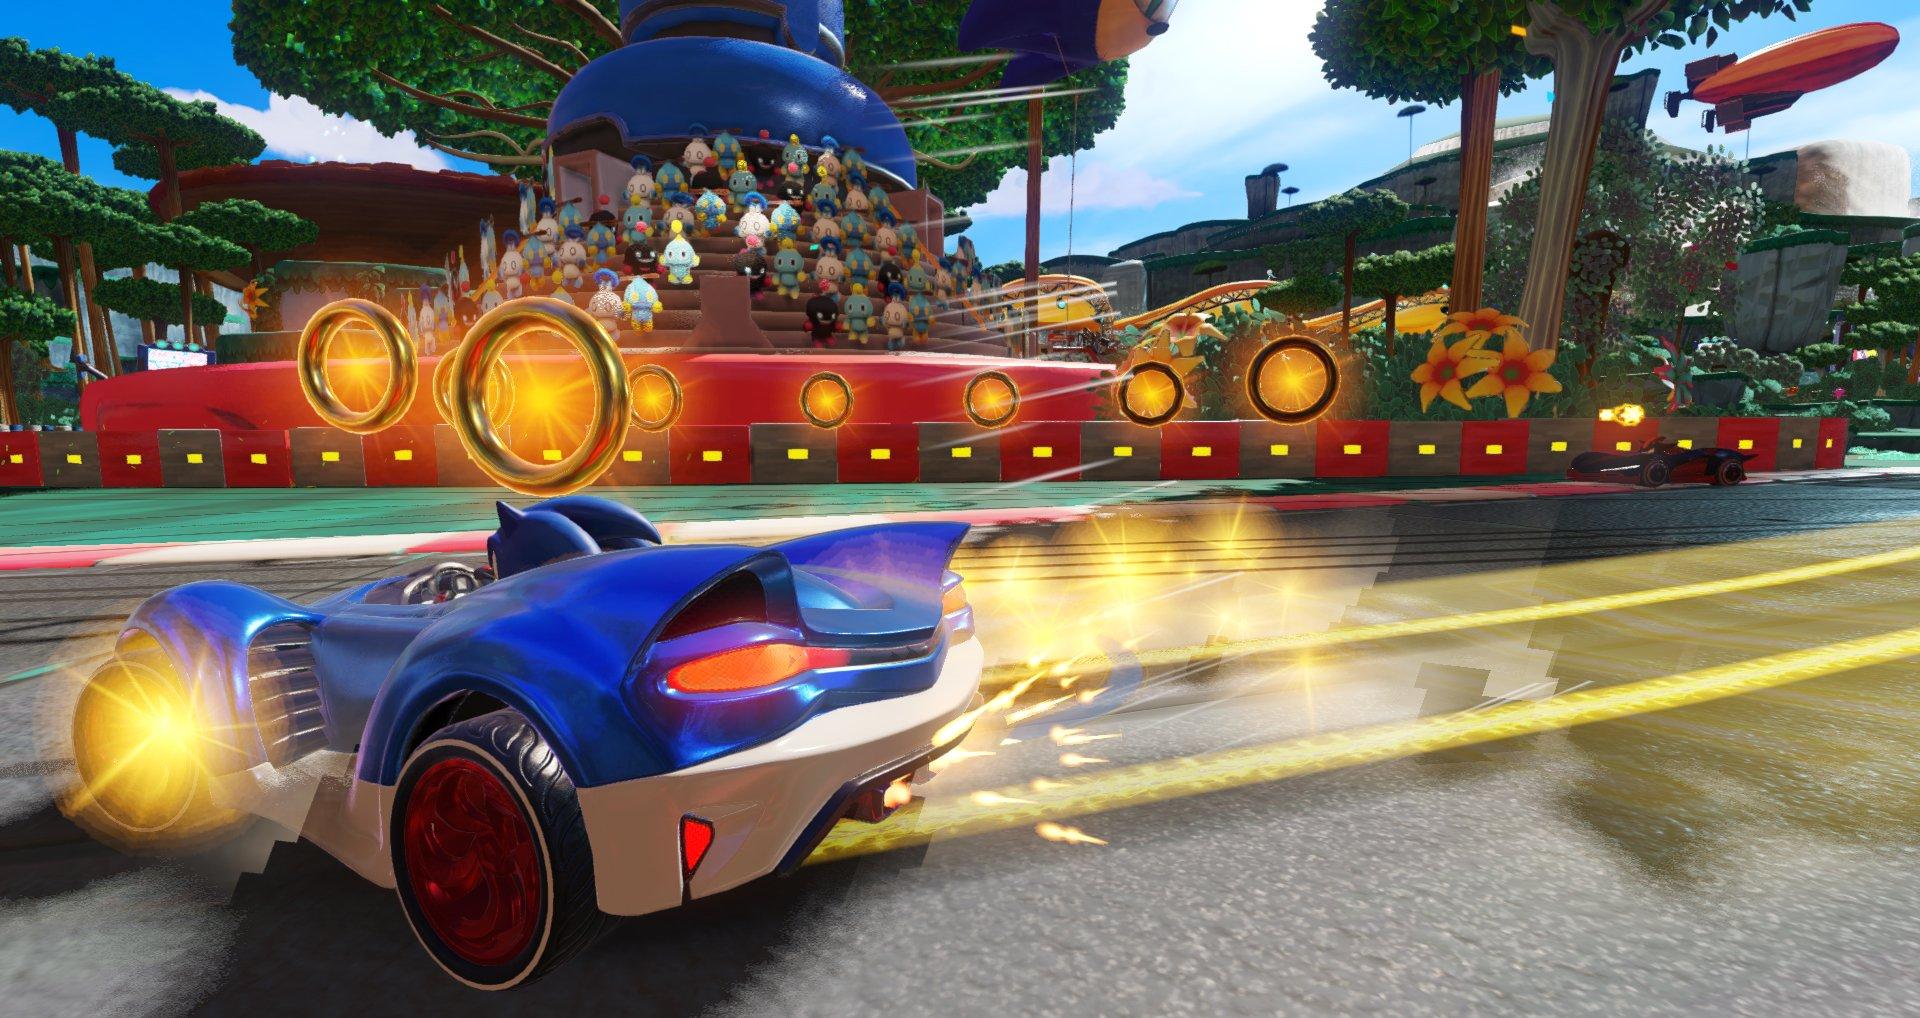 Sonic & All-Stars Racing Transformed (Nintendo Selects) - Nintendo